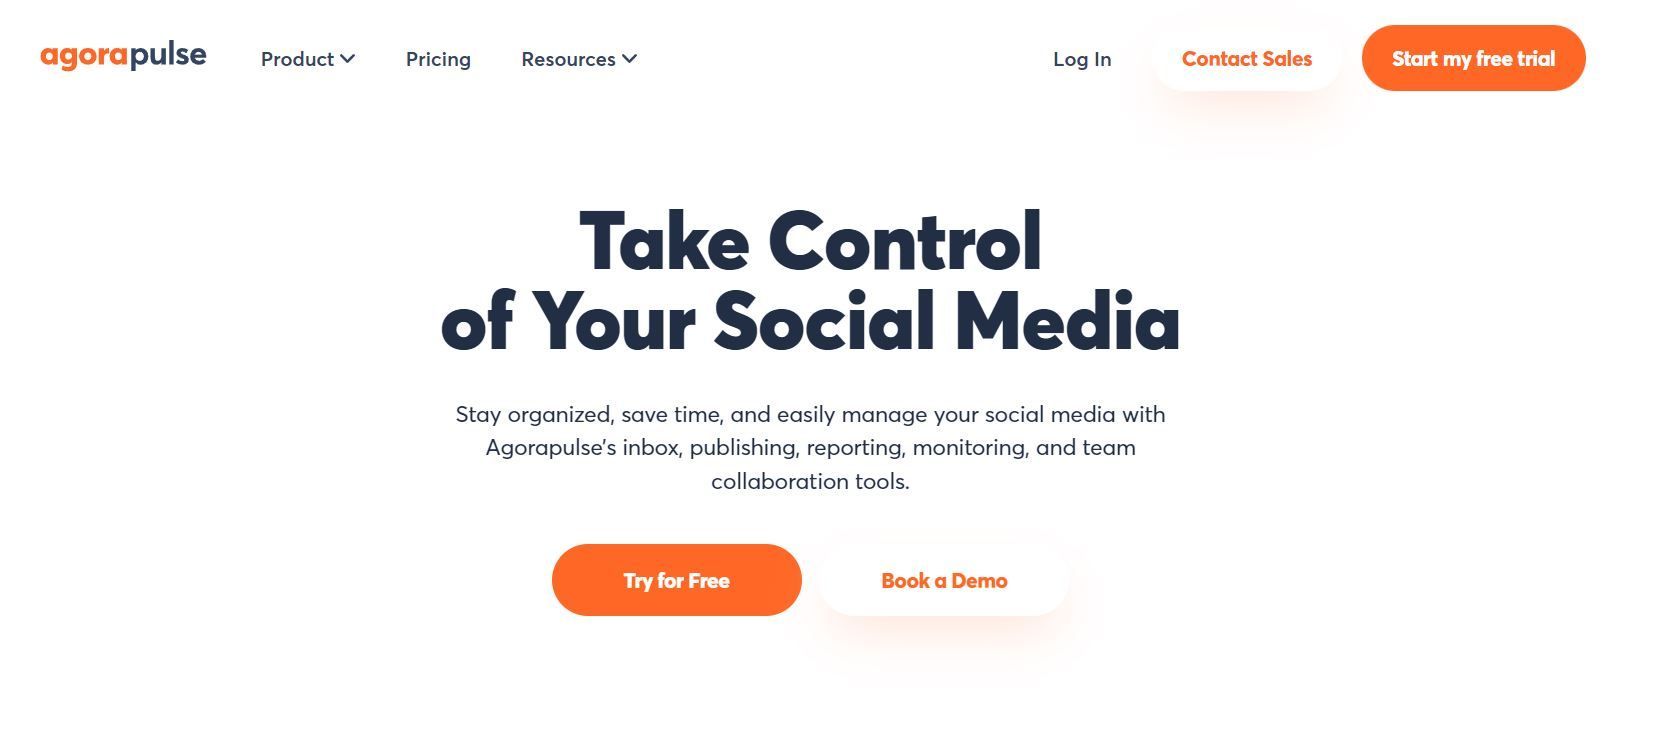 Agorapulse is a social media management tool